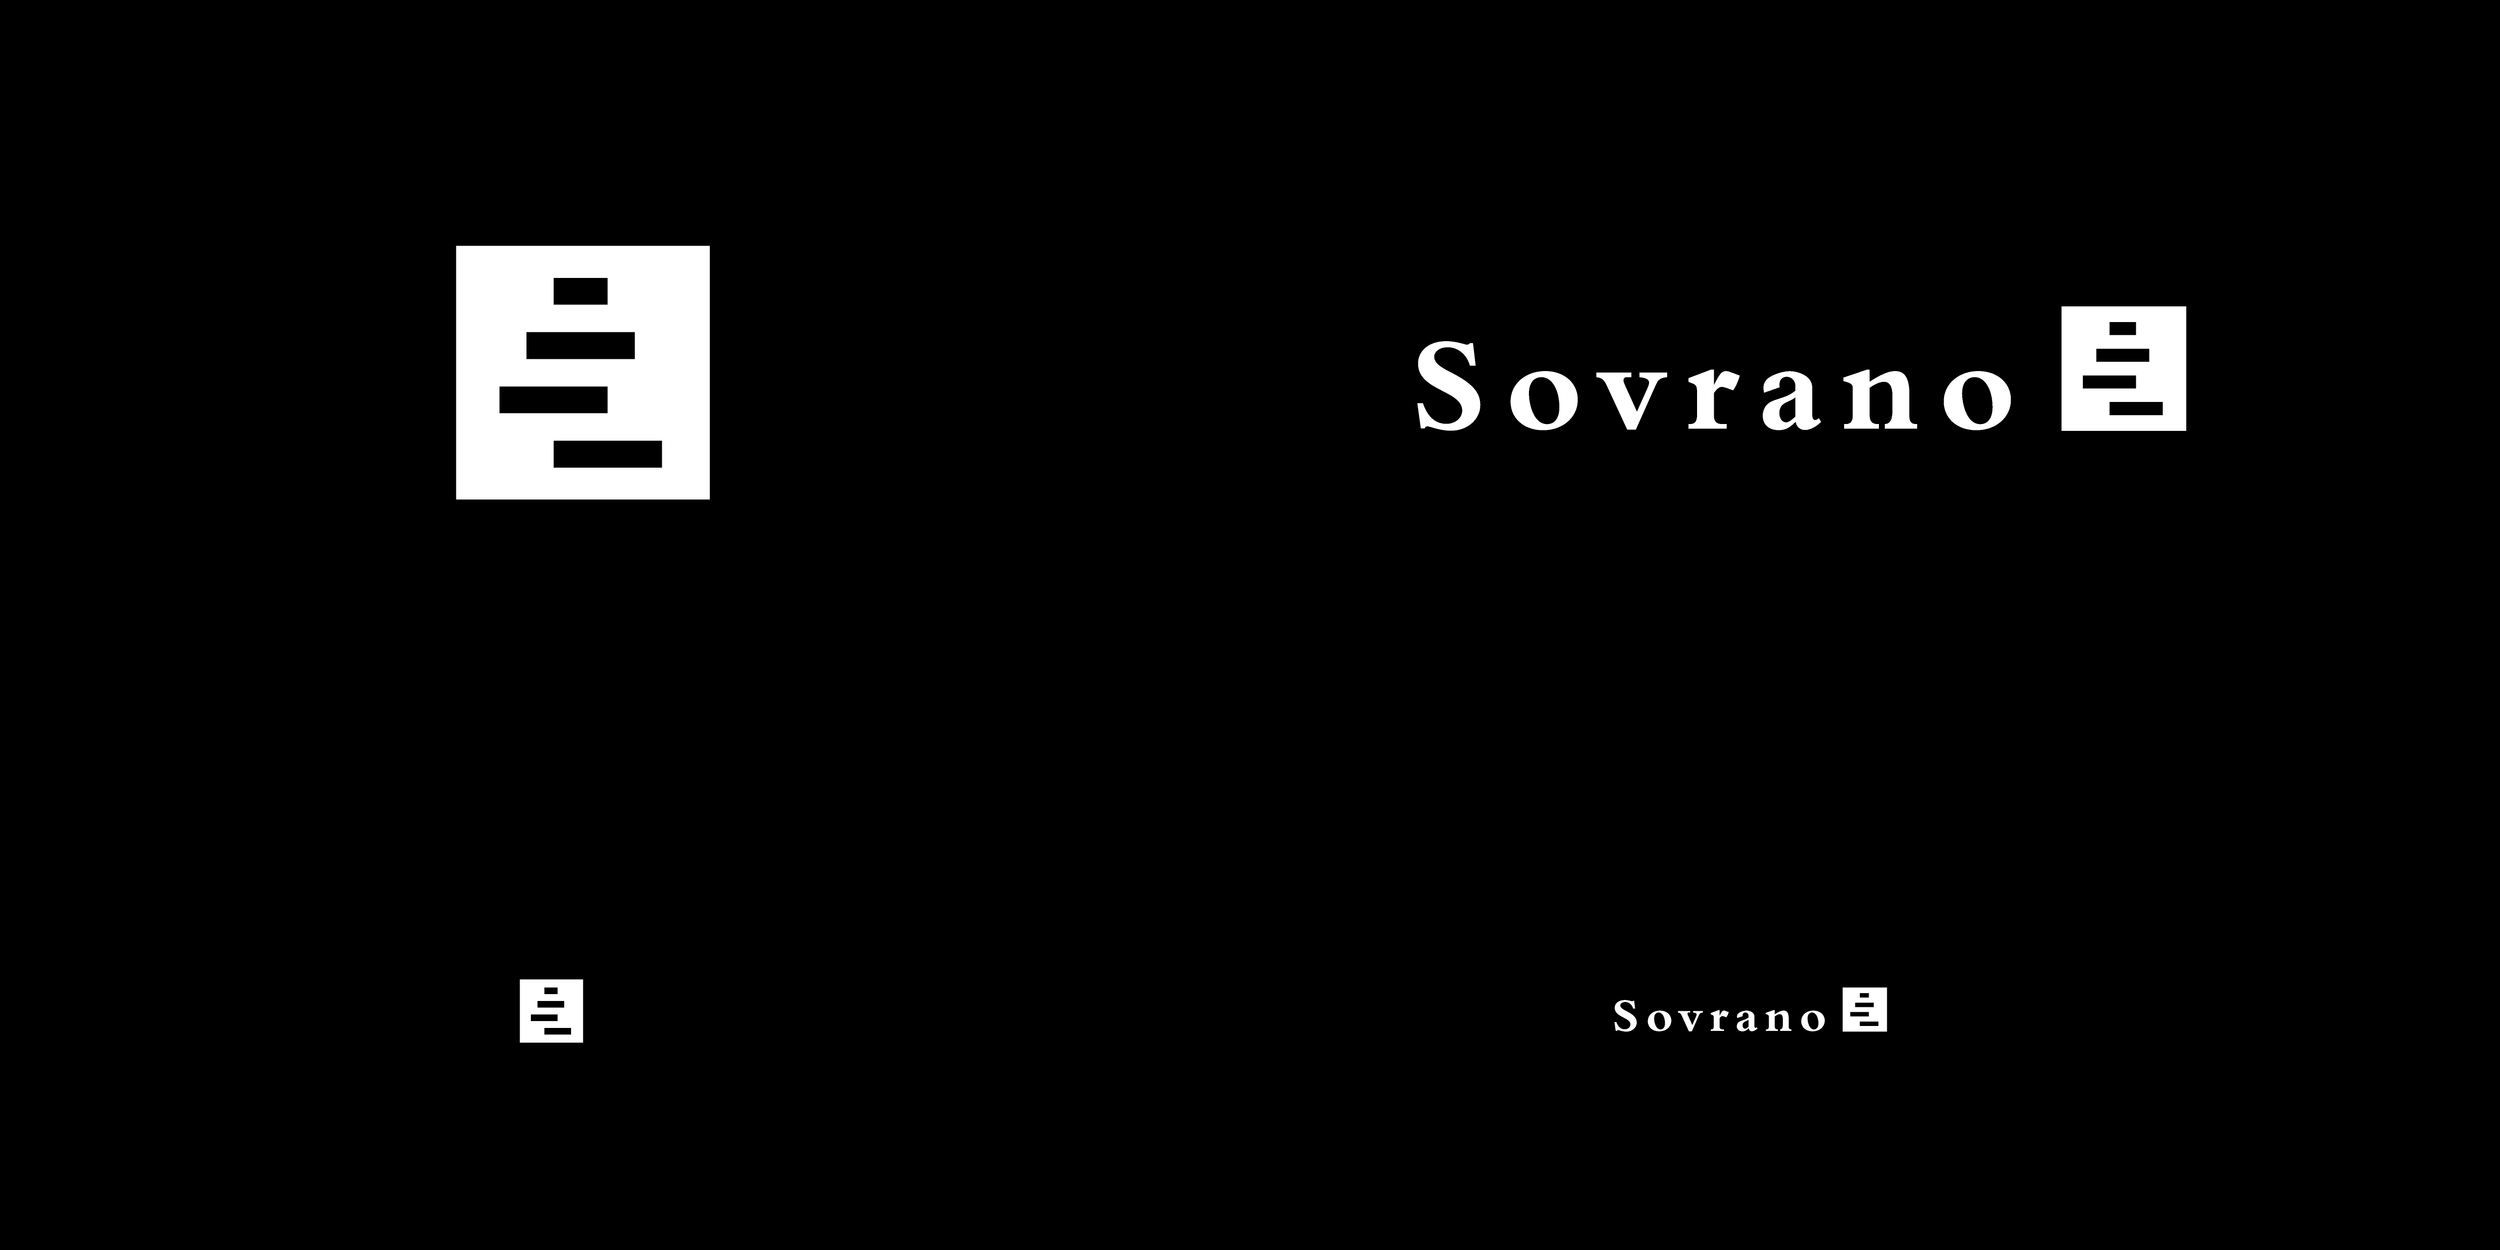 Sovrano Trademark.png